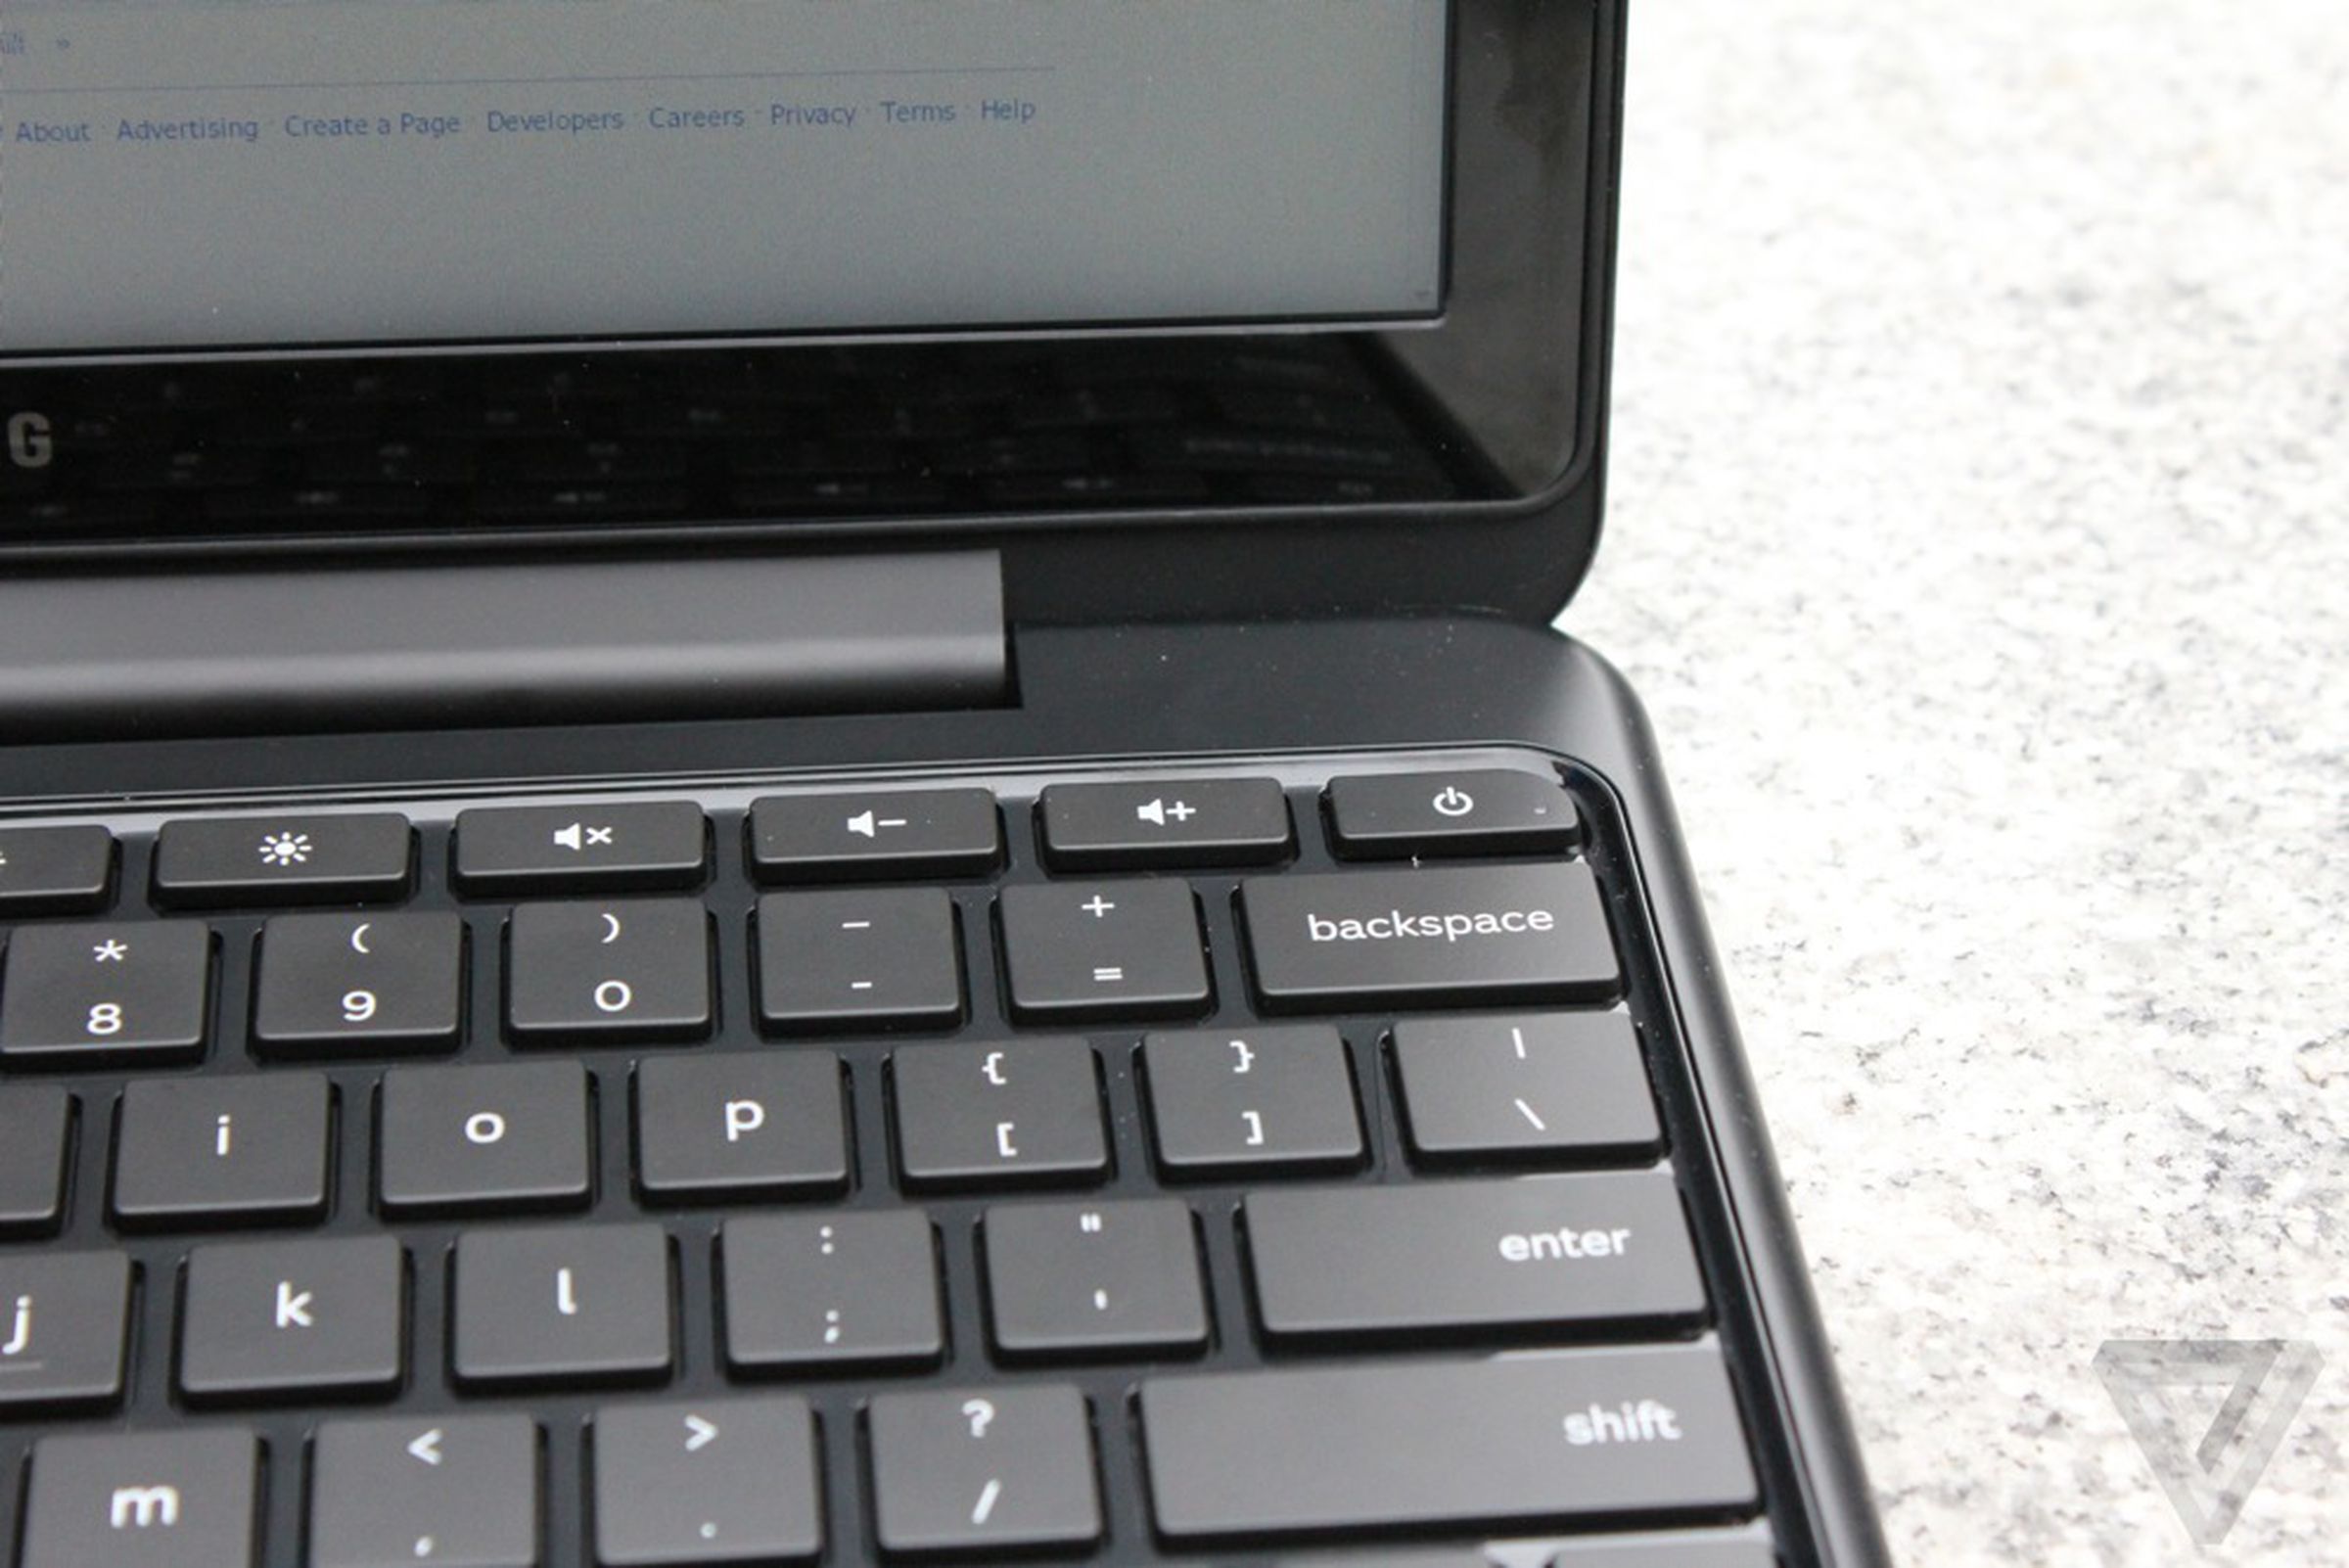 Samsung Series 5 Chromebook review